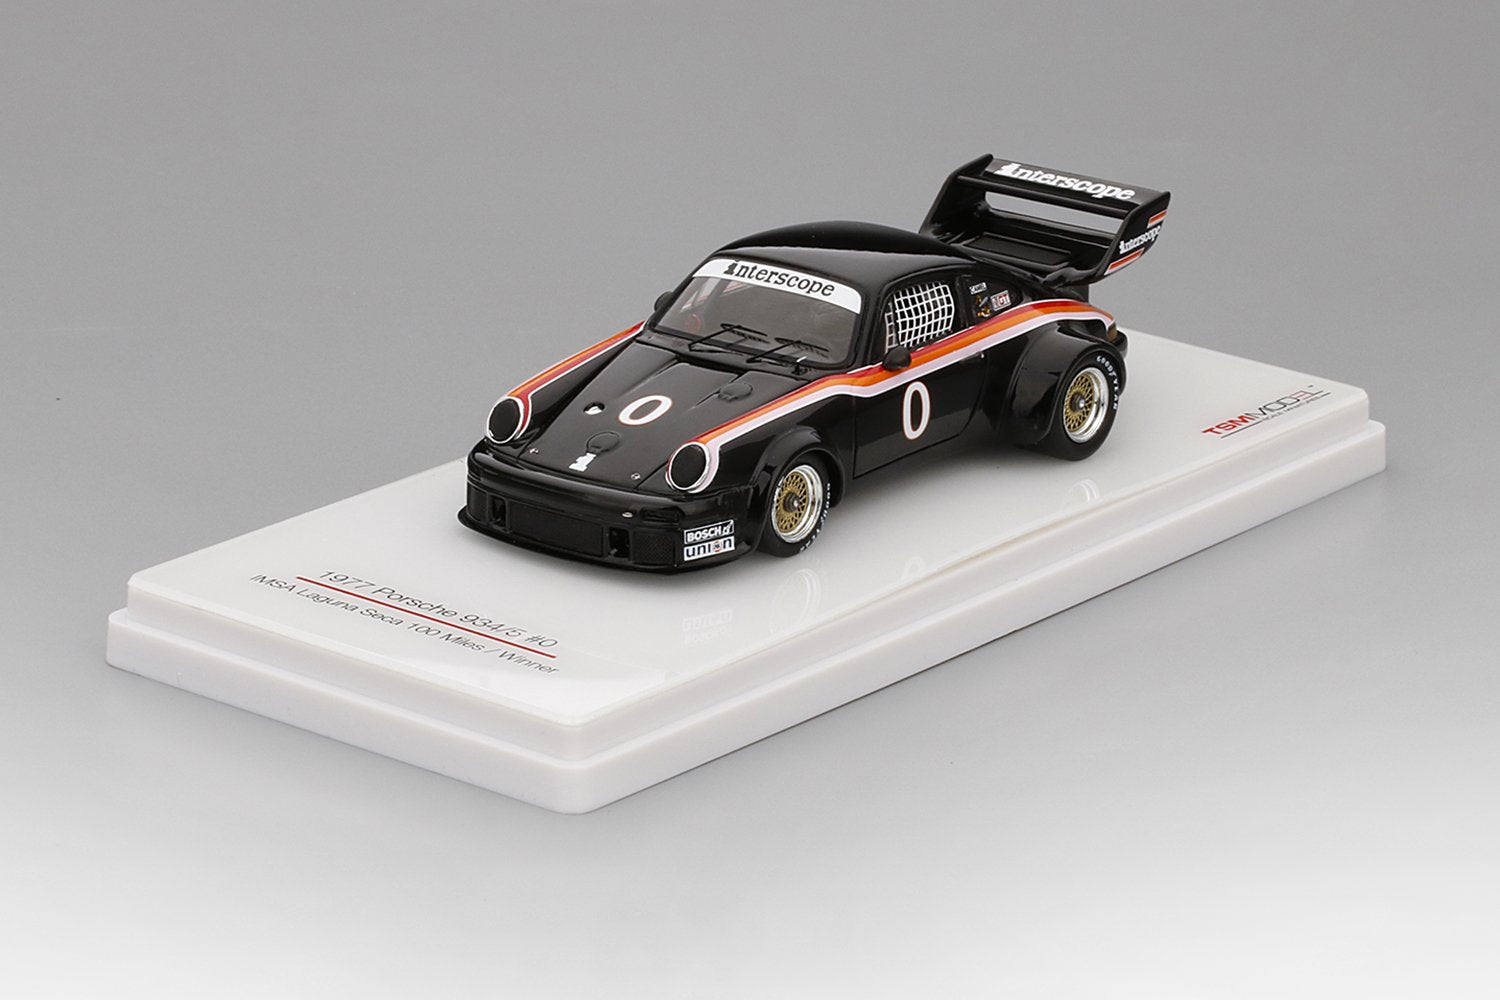 tsm-model-porsche-934-5-winner-1977-imsa-laguna-seca-1-43-scale-model-car-tsm430226